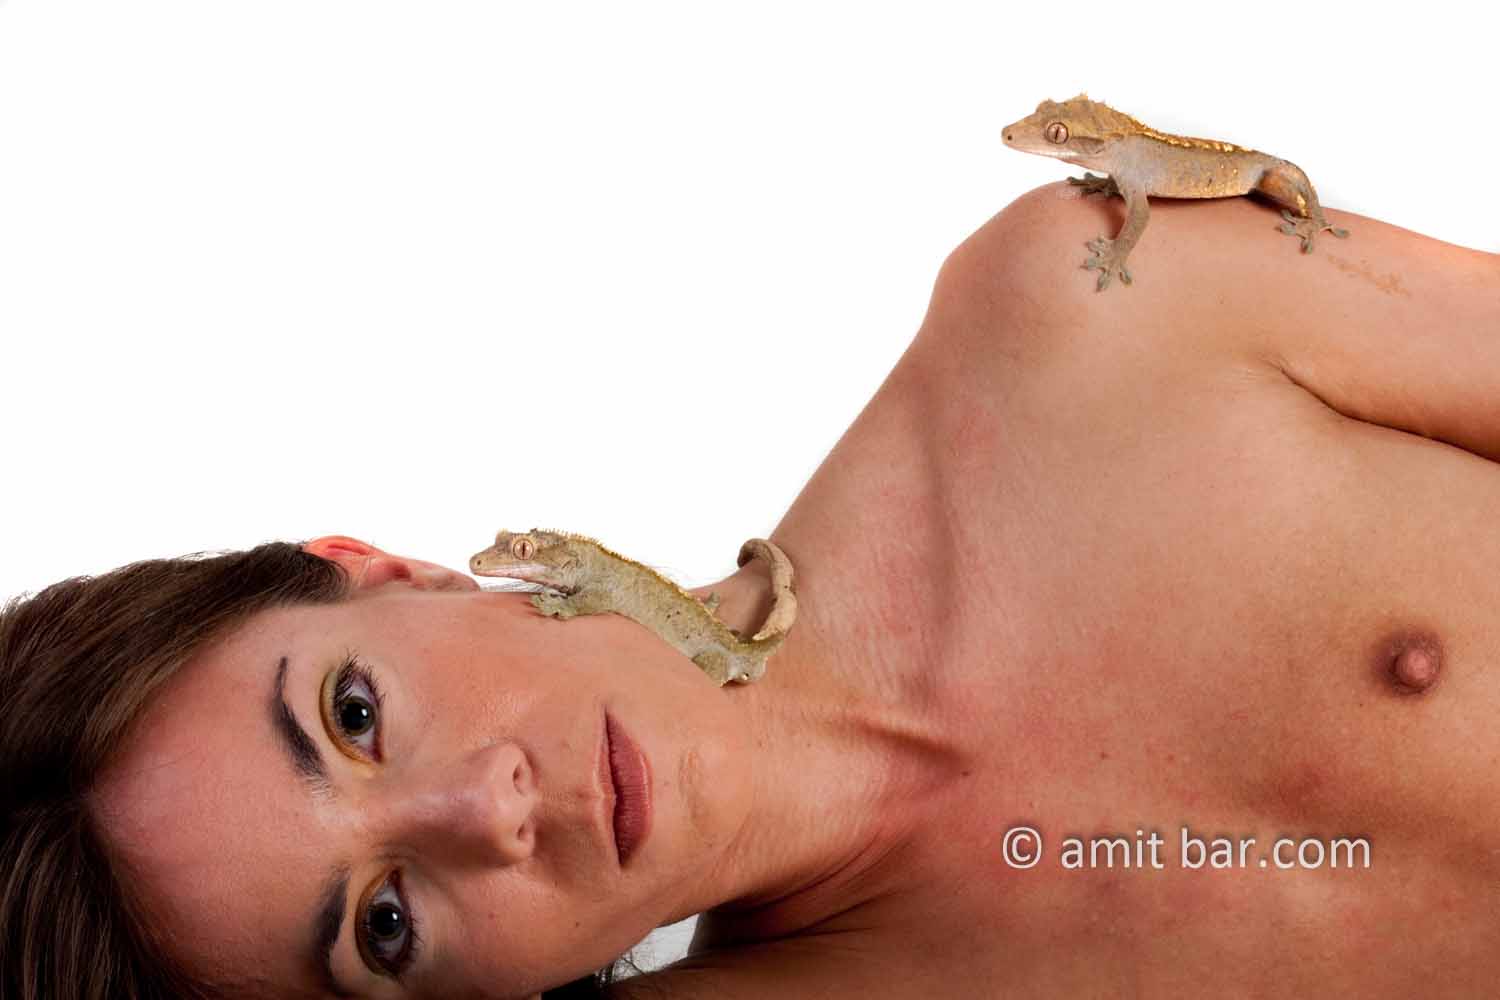 Crested gecko II: crested gecko on woman's shoulder